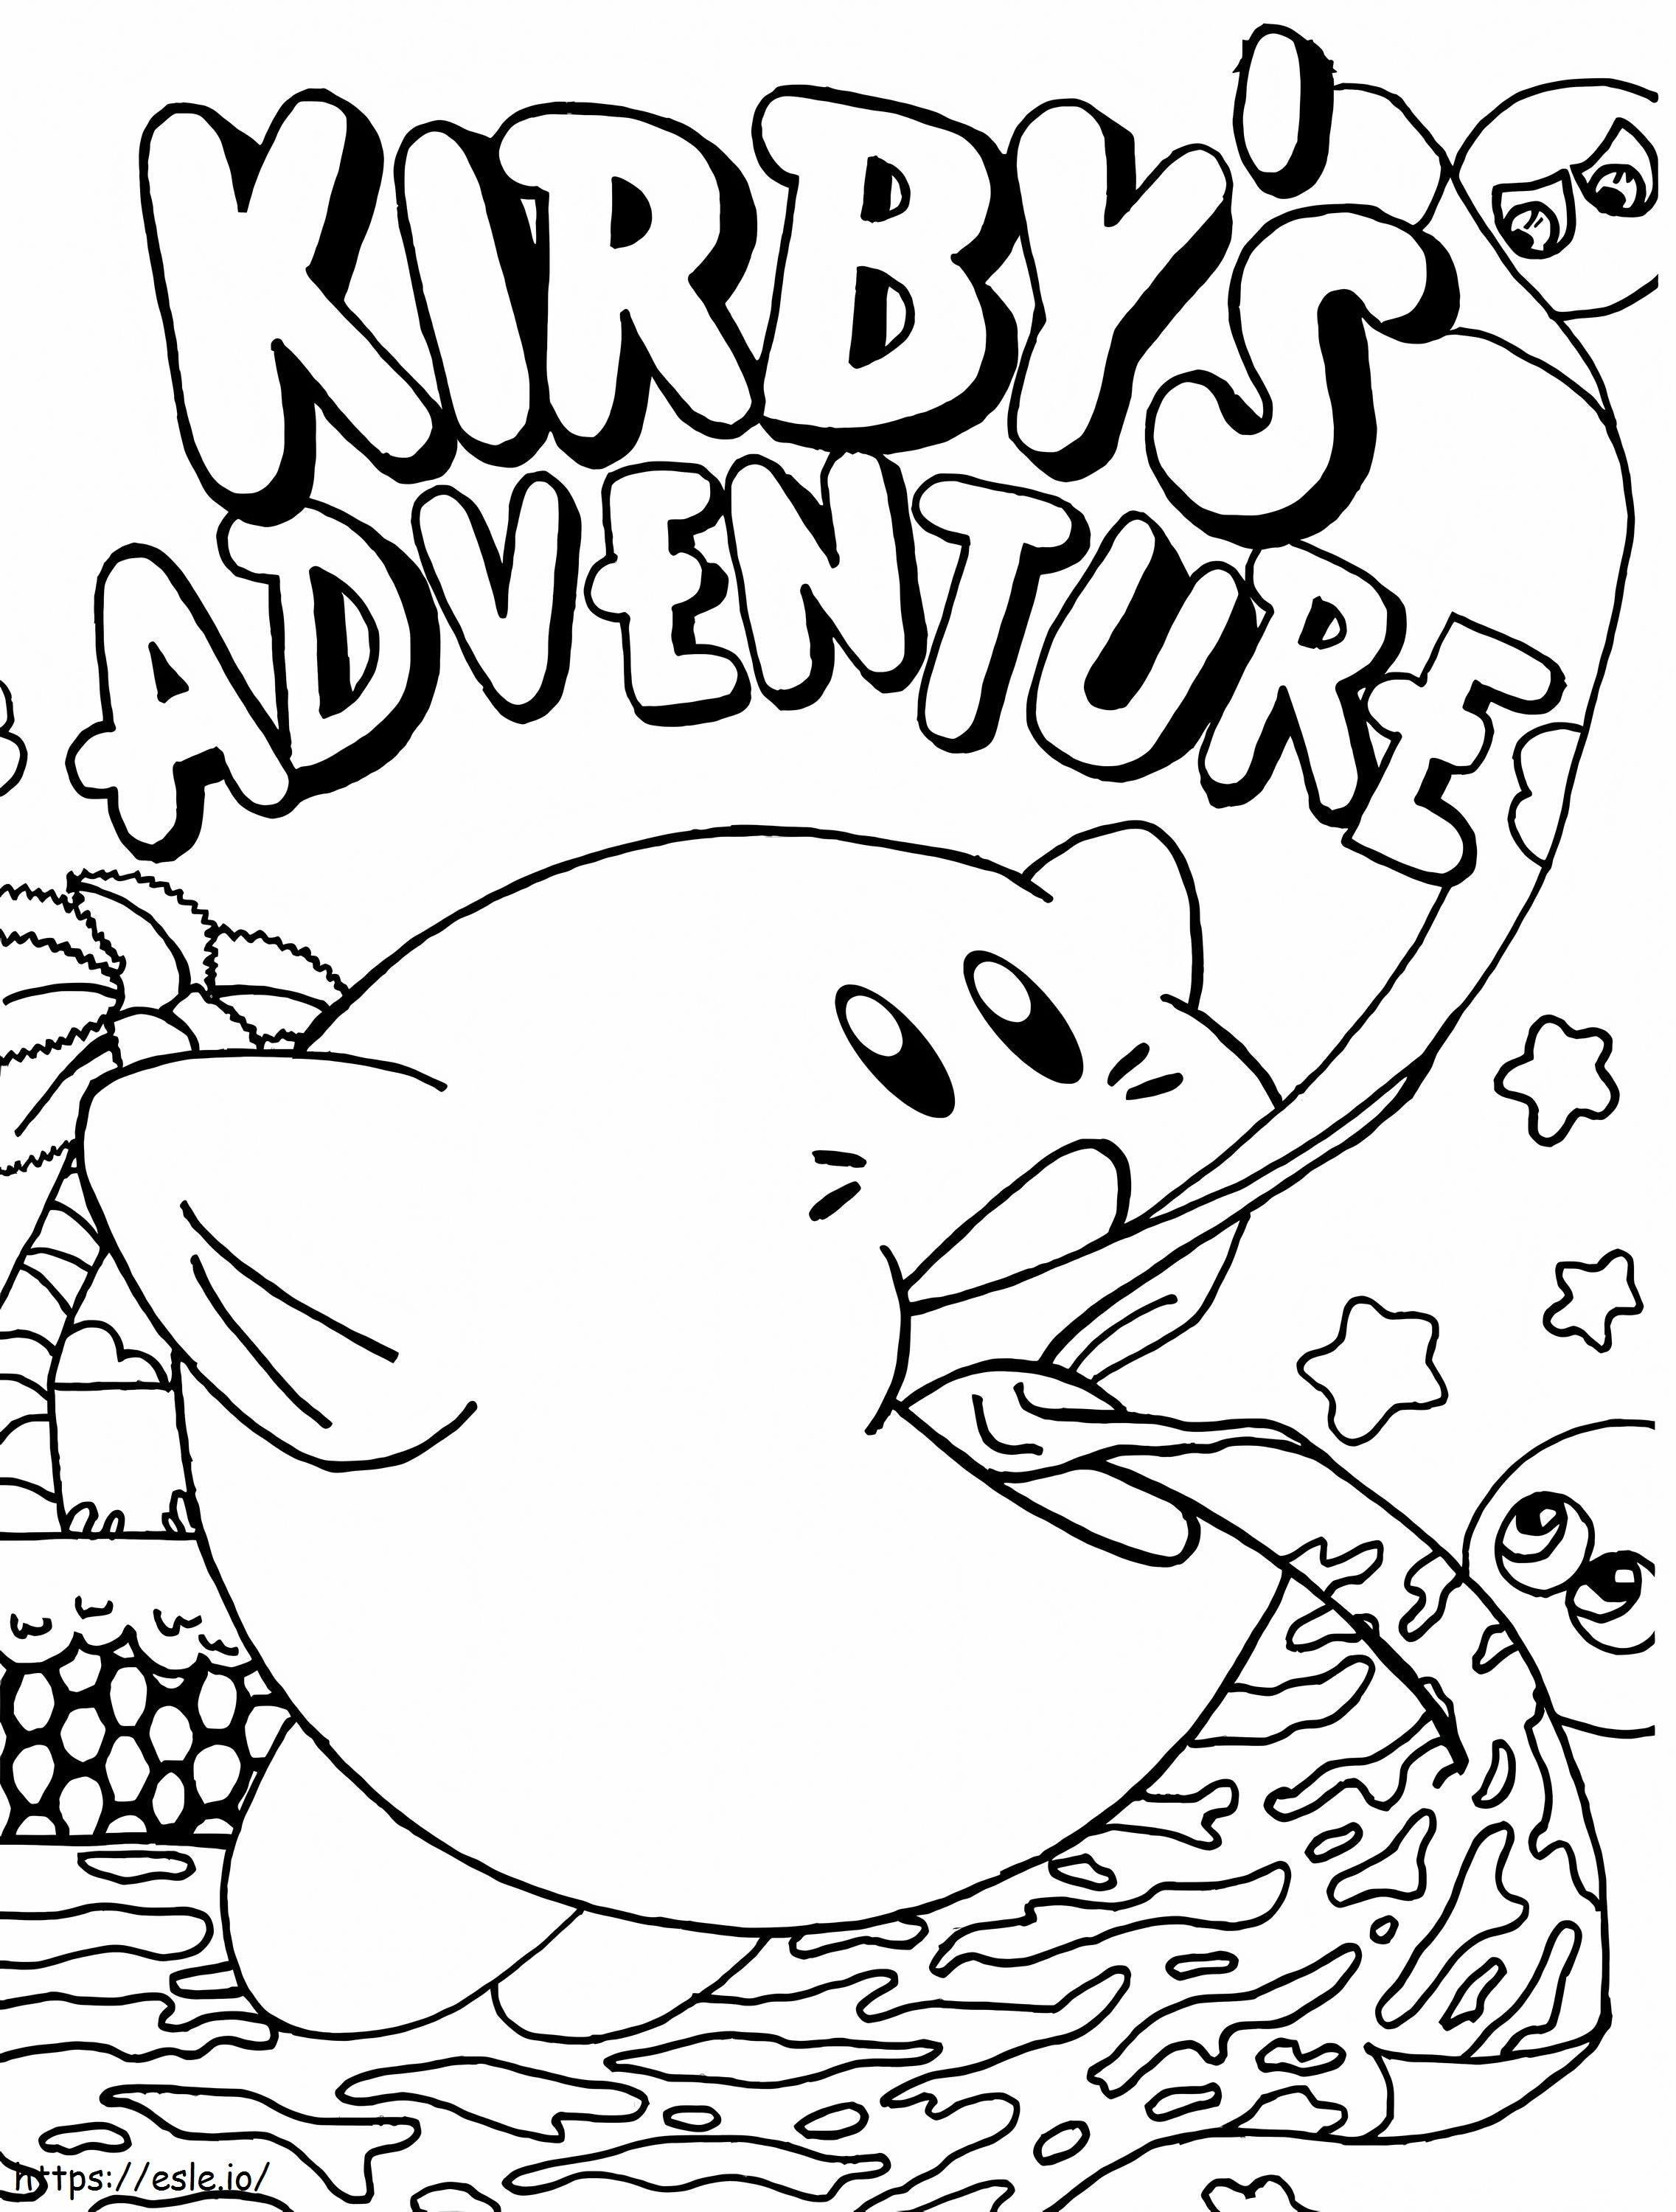 Kirbys Abenteuer ausmalbilder